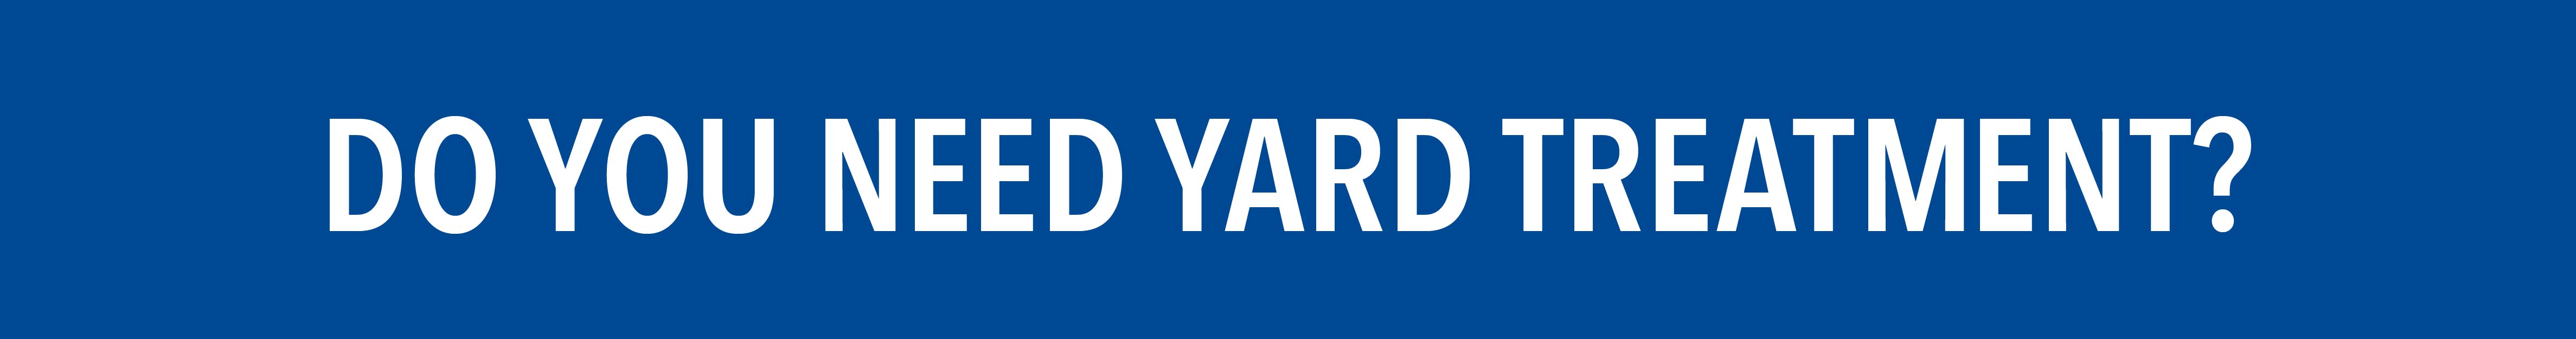 Yard Treatment